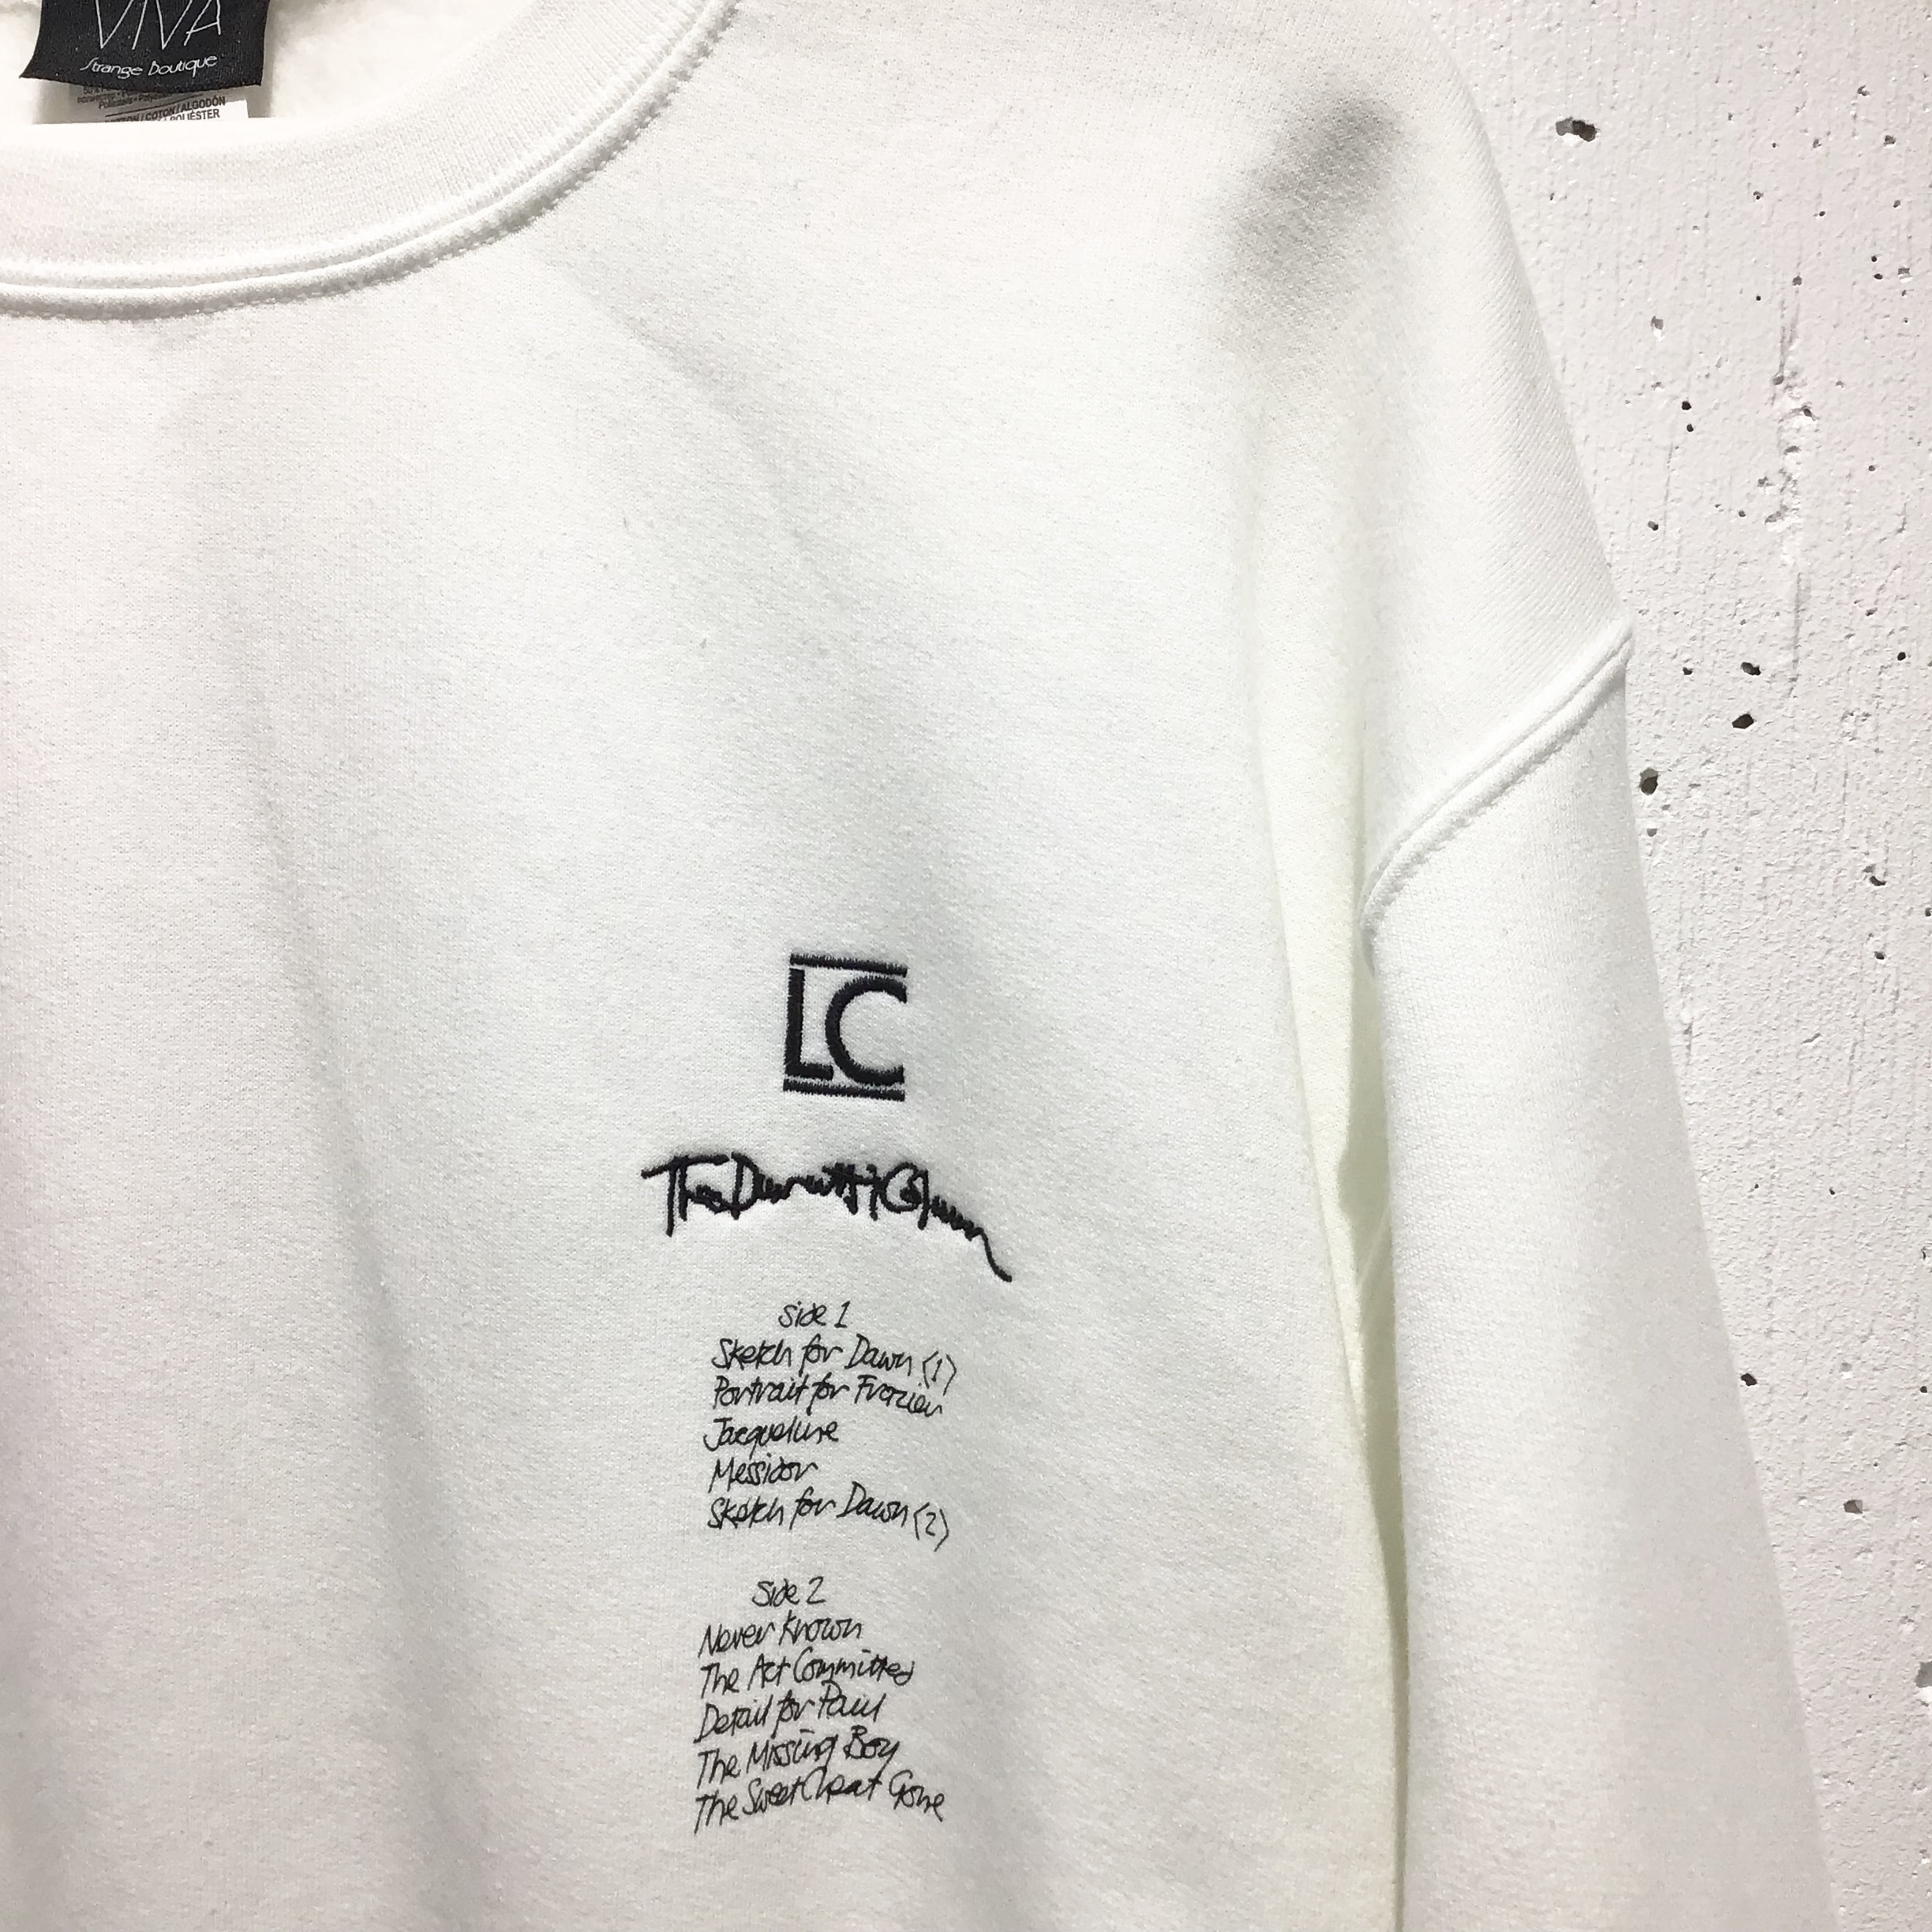 THE DURUTTI COLUMN “LC” Embroidered Sweatshirt